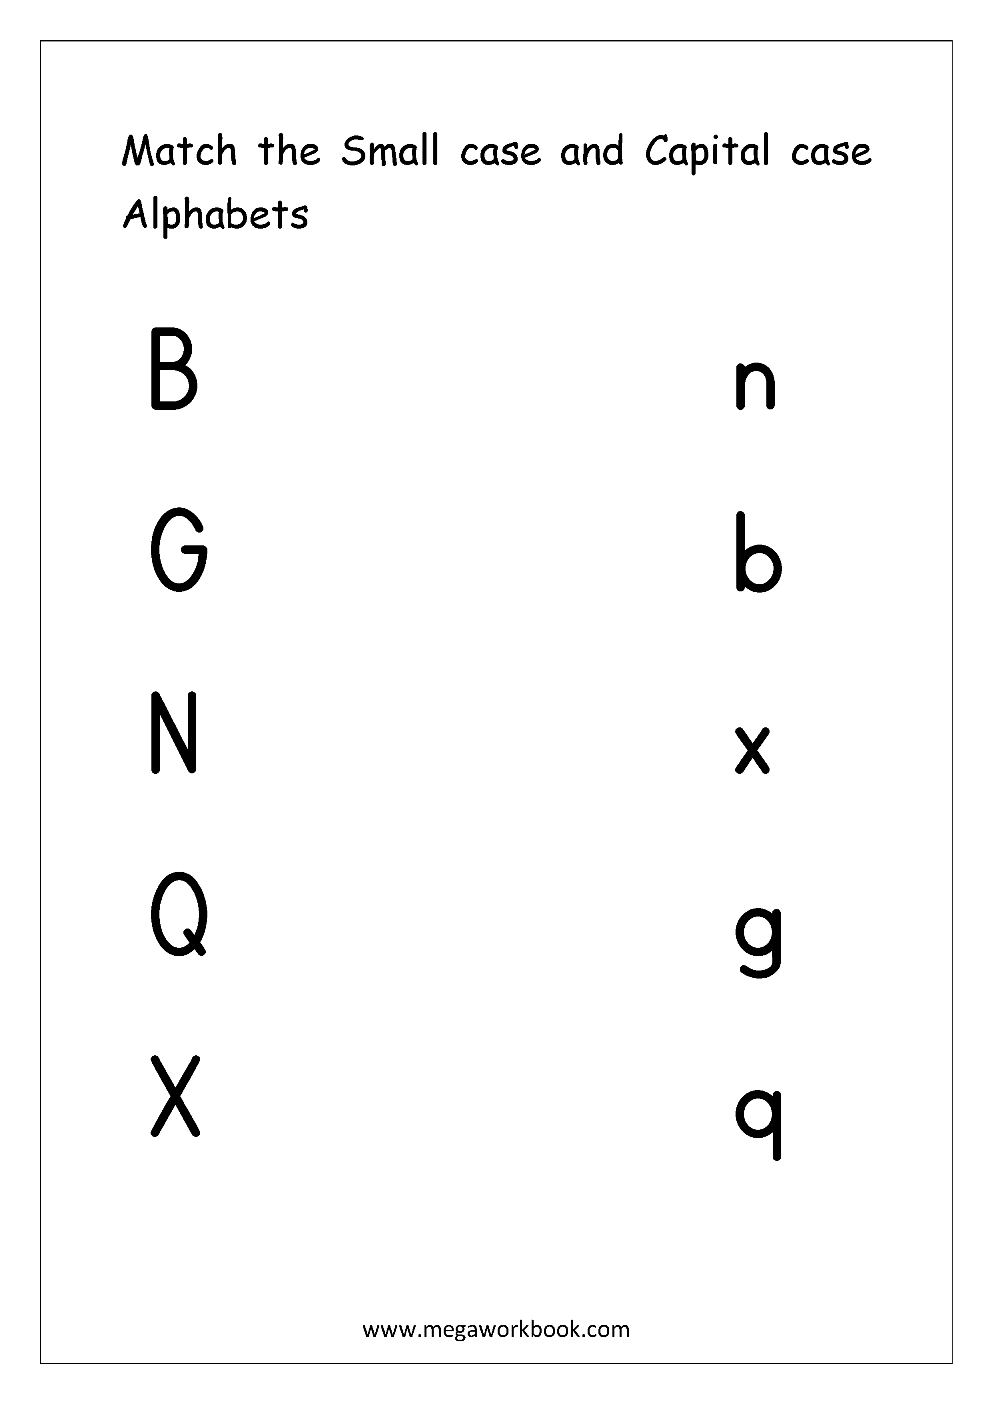 English Worksheets - Alphabet Matching | Letter Matching inside Alphabet Matching Worksheets With Pictures